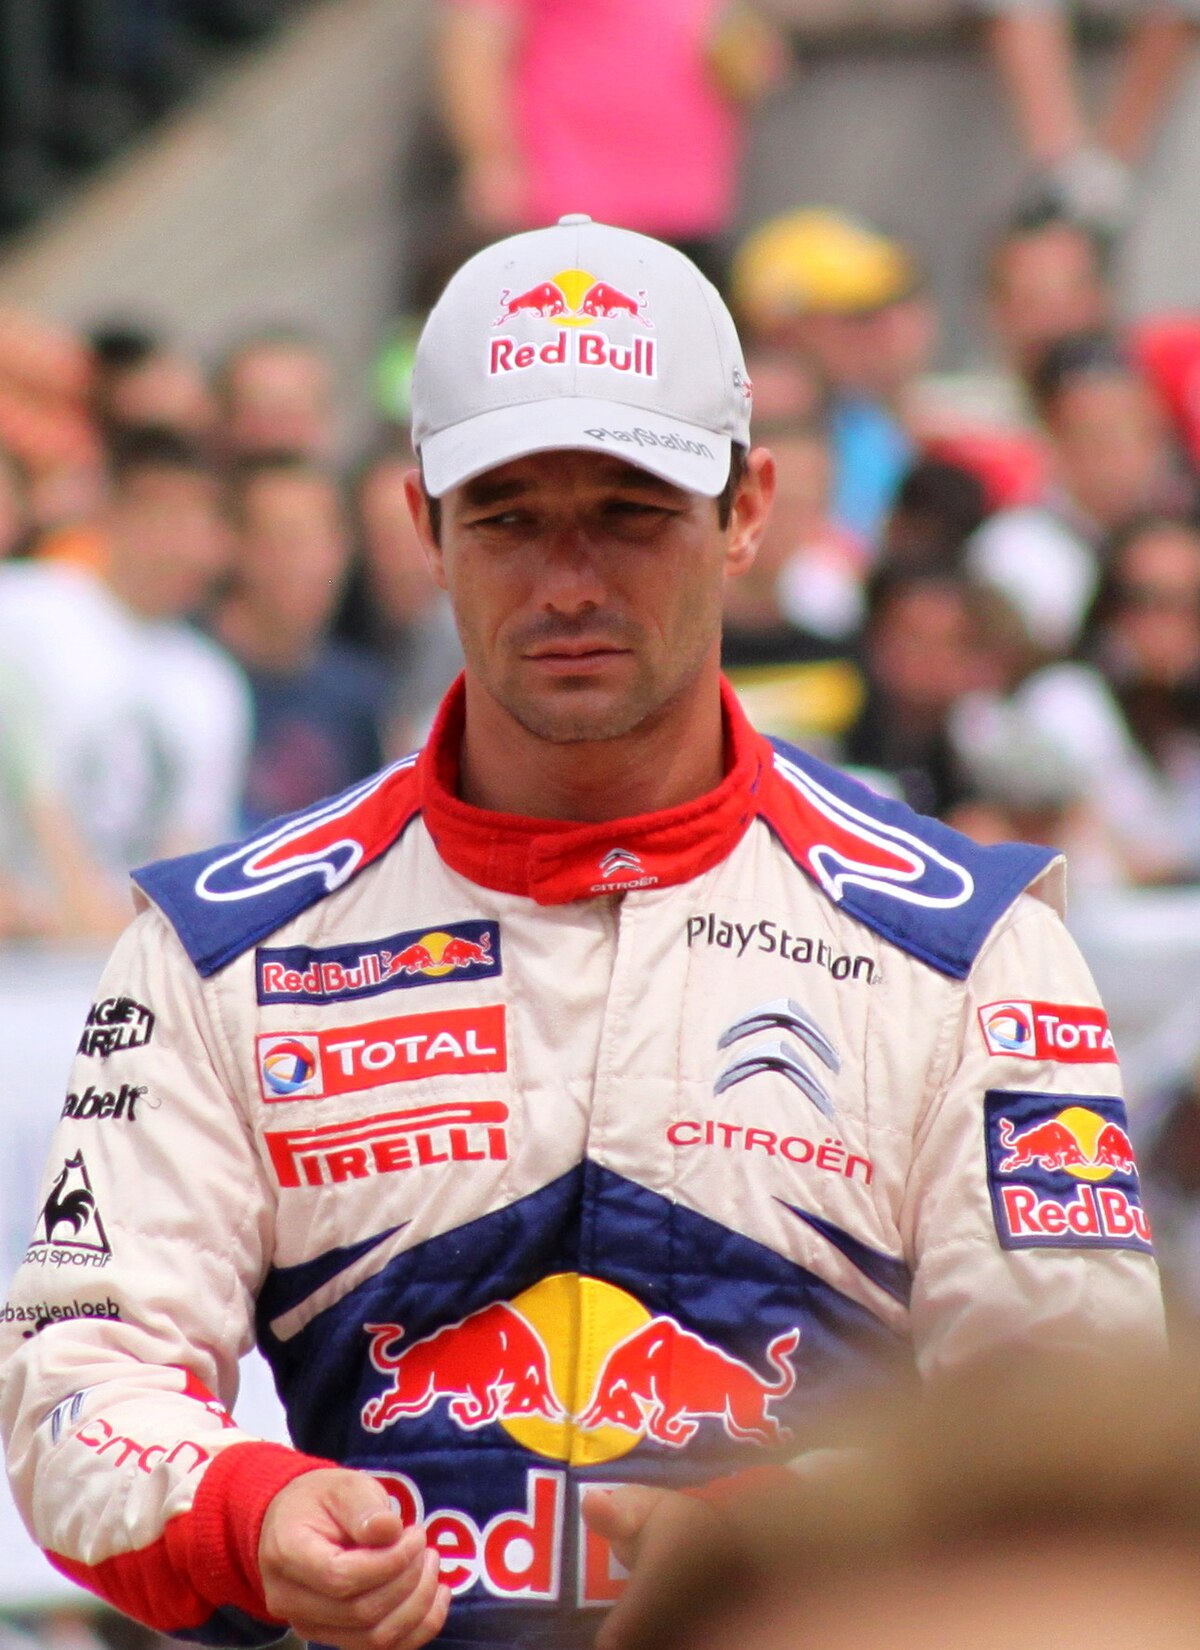 Nine-time world champion Sebastien Loeb early leader in Rally of